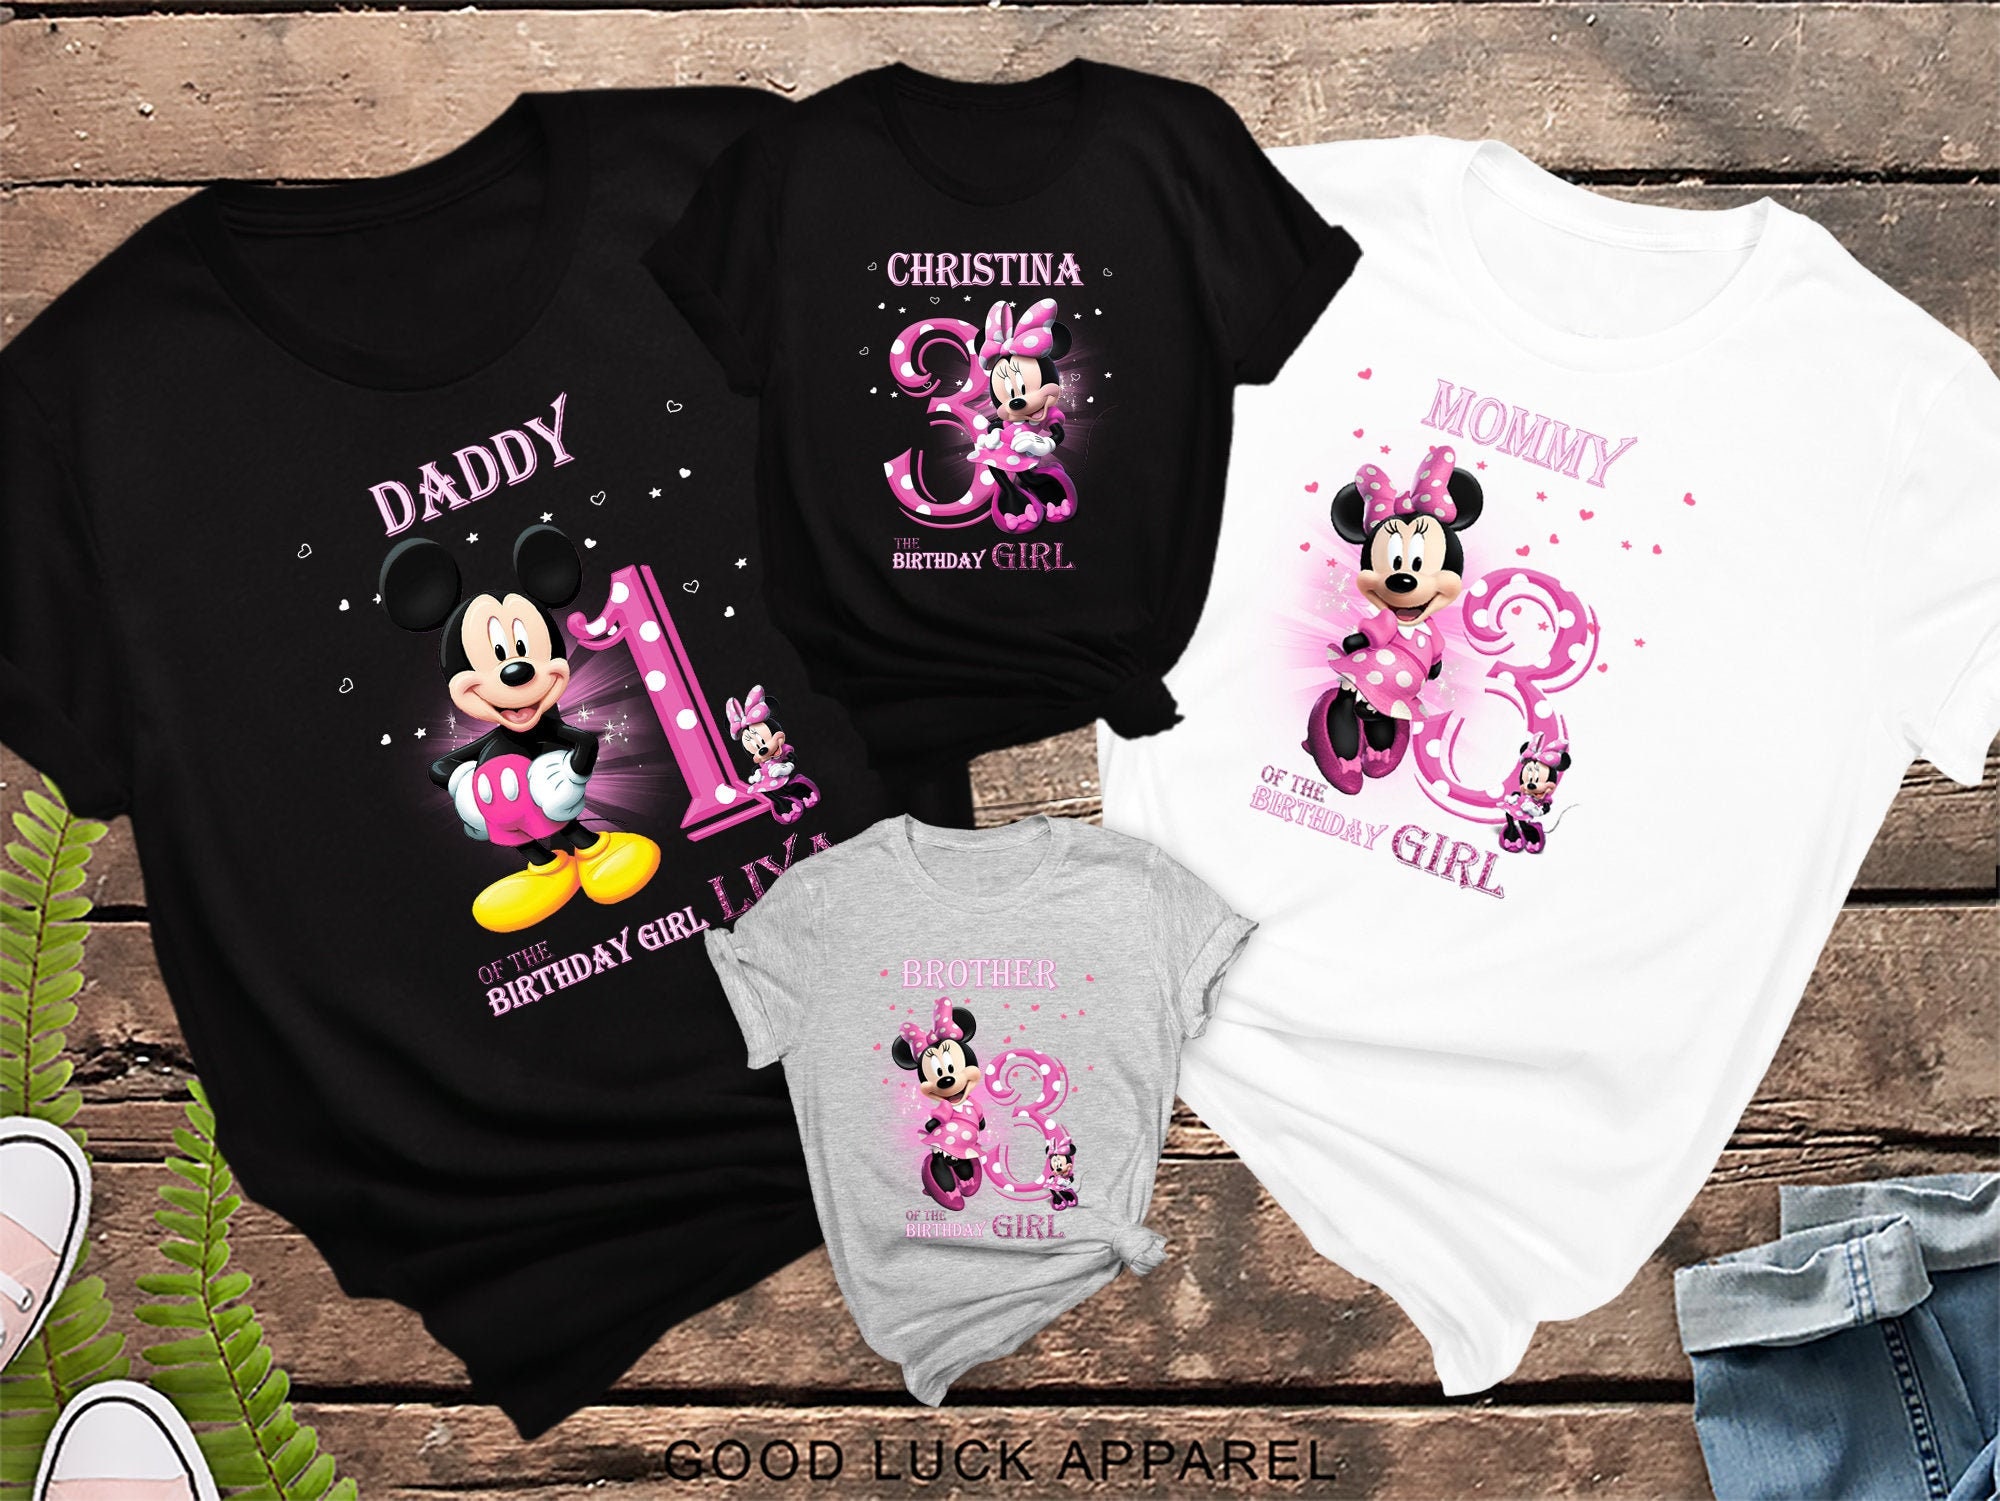  Addy Name - Camiseta negra para mujer, diseño de niña rosa,  Negro - : Ropa, Zapatos y Joyería